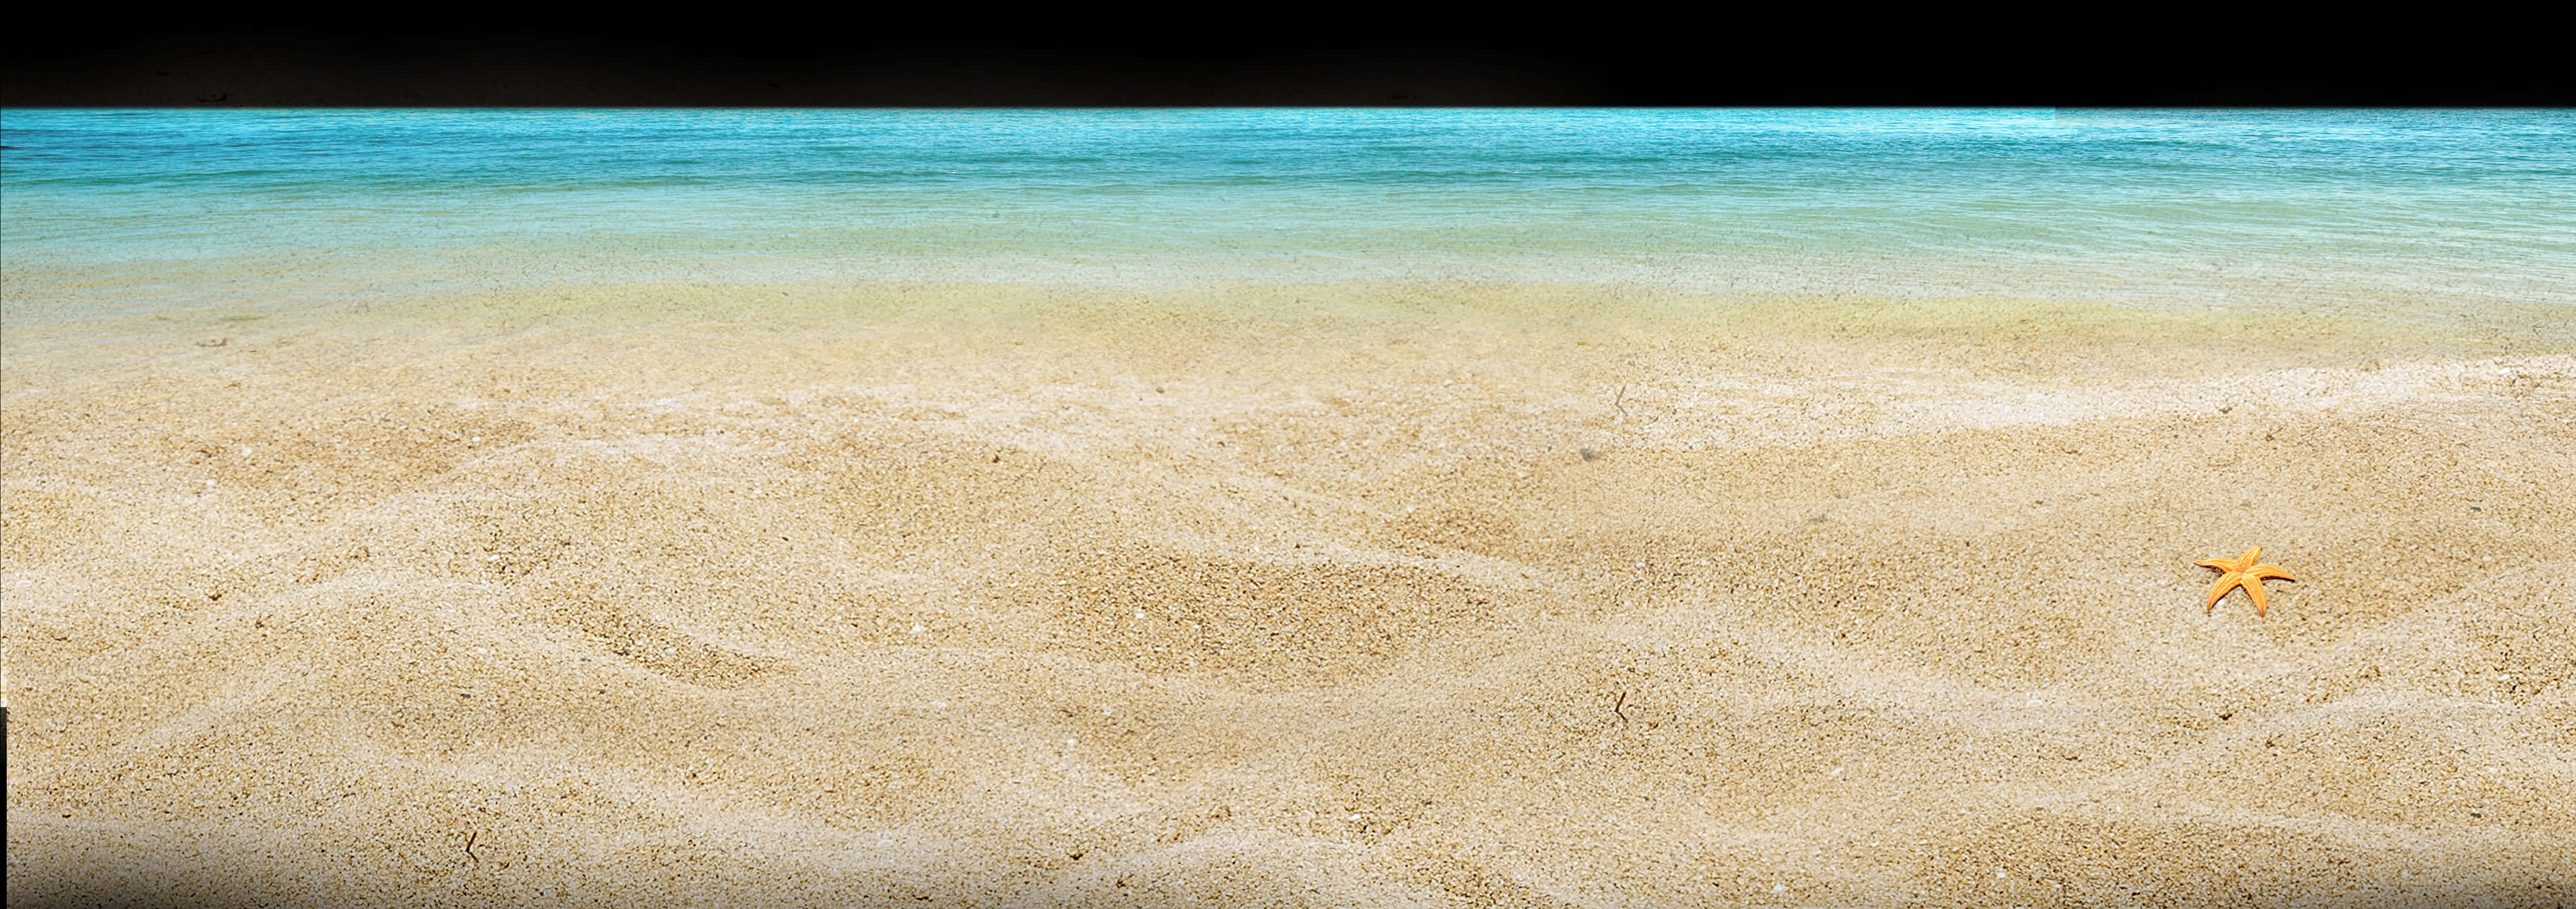 Starfishon Sandy Beach Ocean View PNG